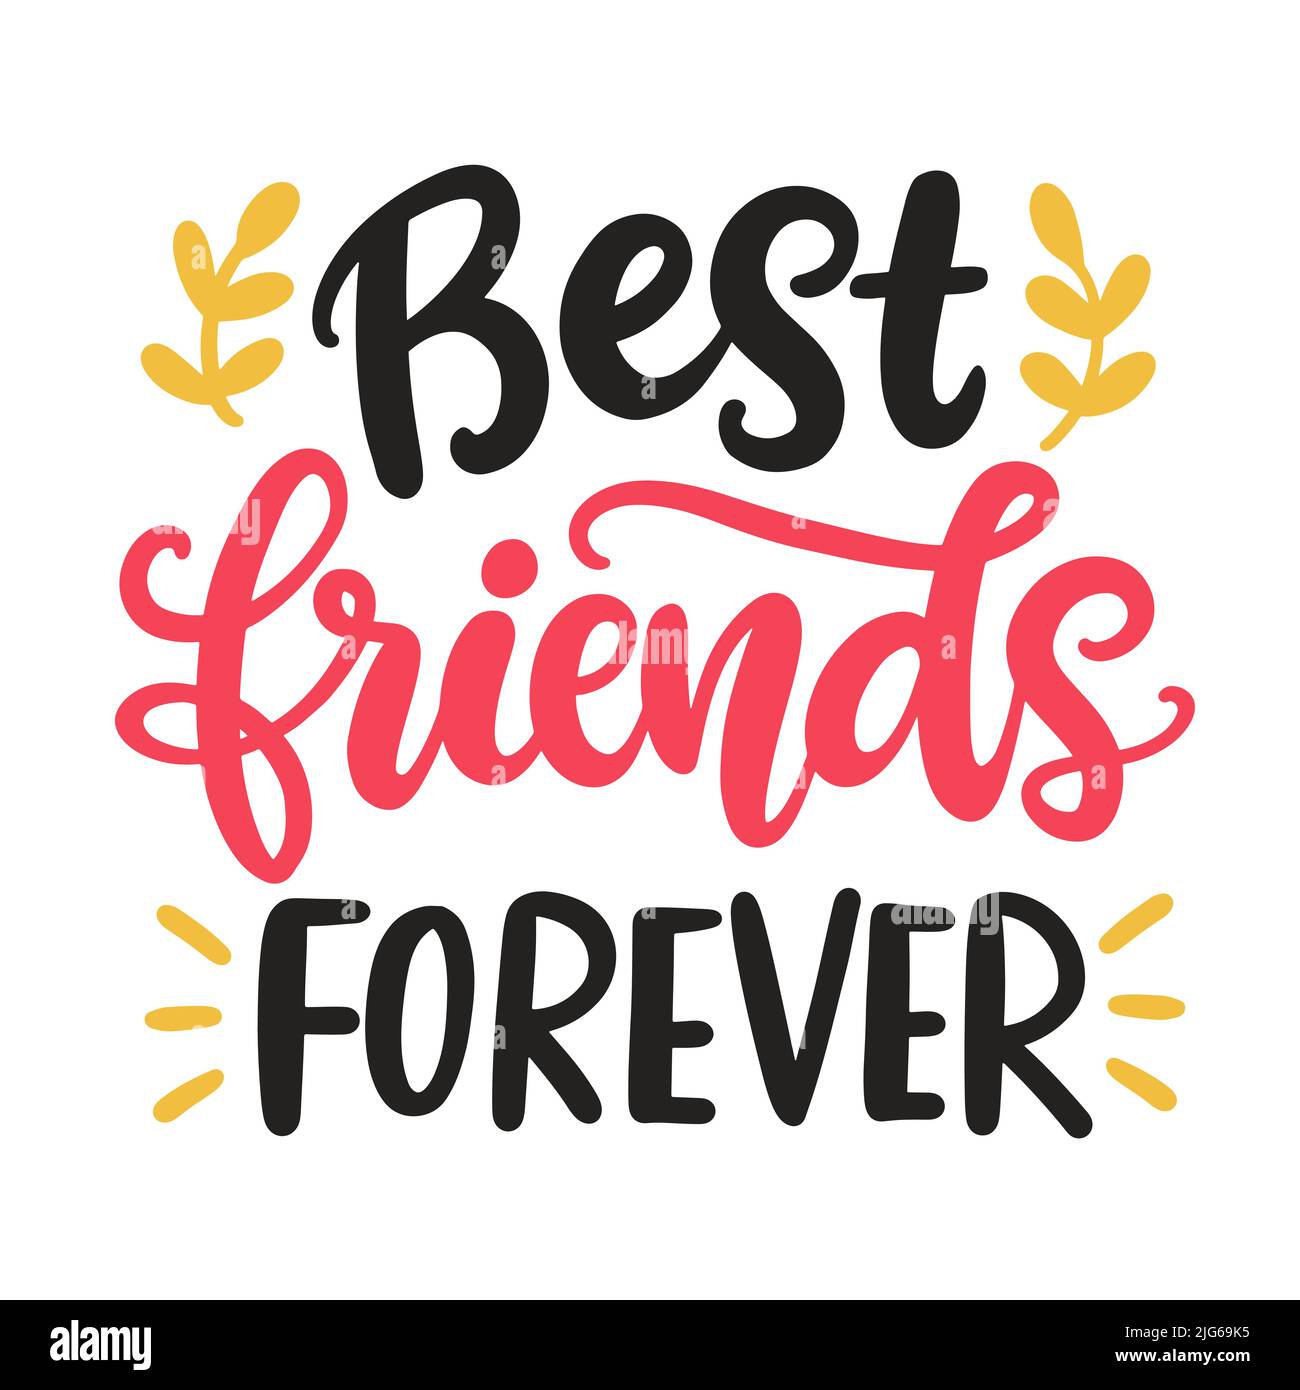 Best friends forever fotografías e imágenes de alta resolución - Alamy